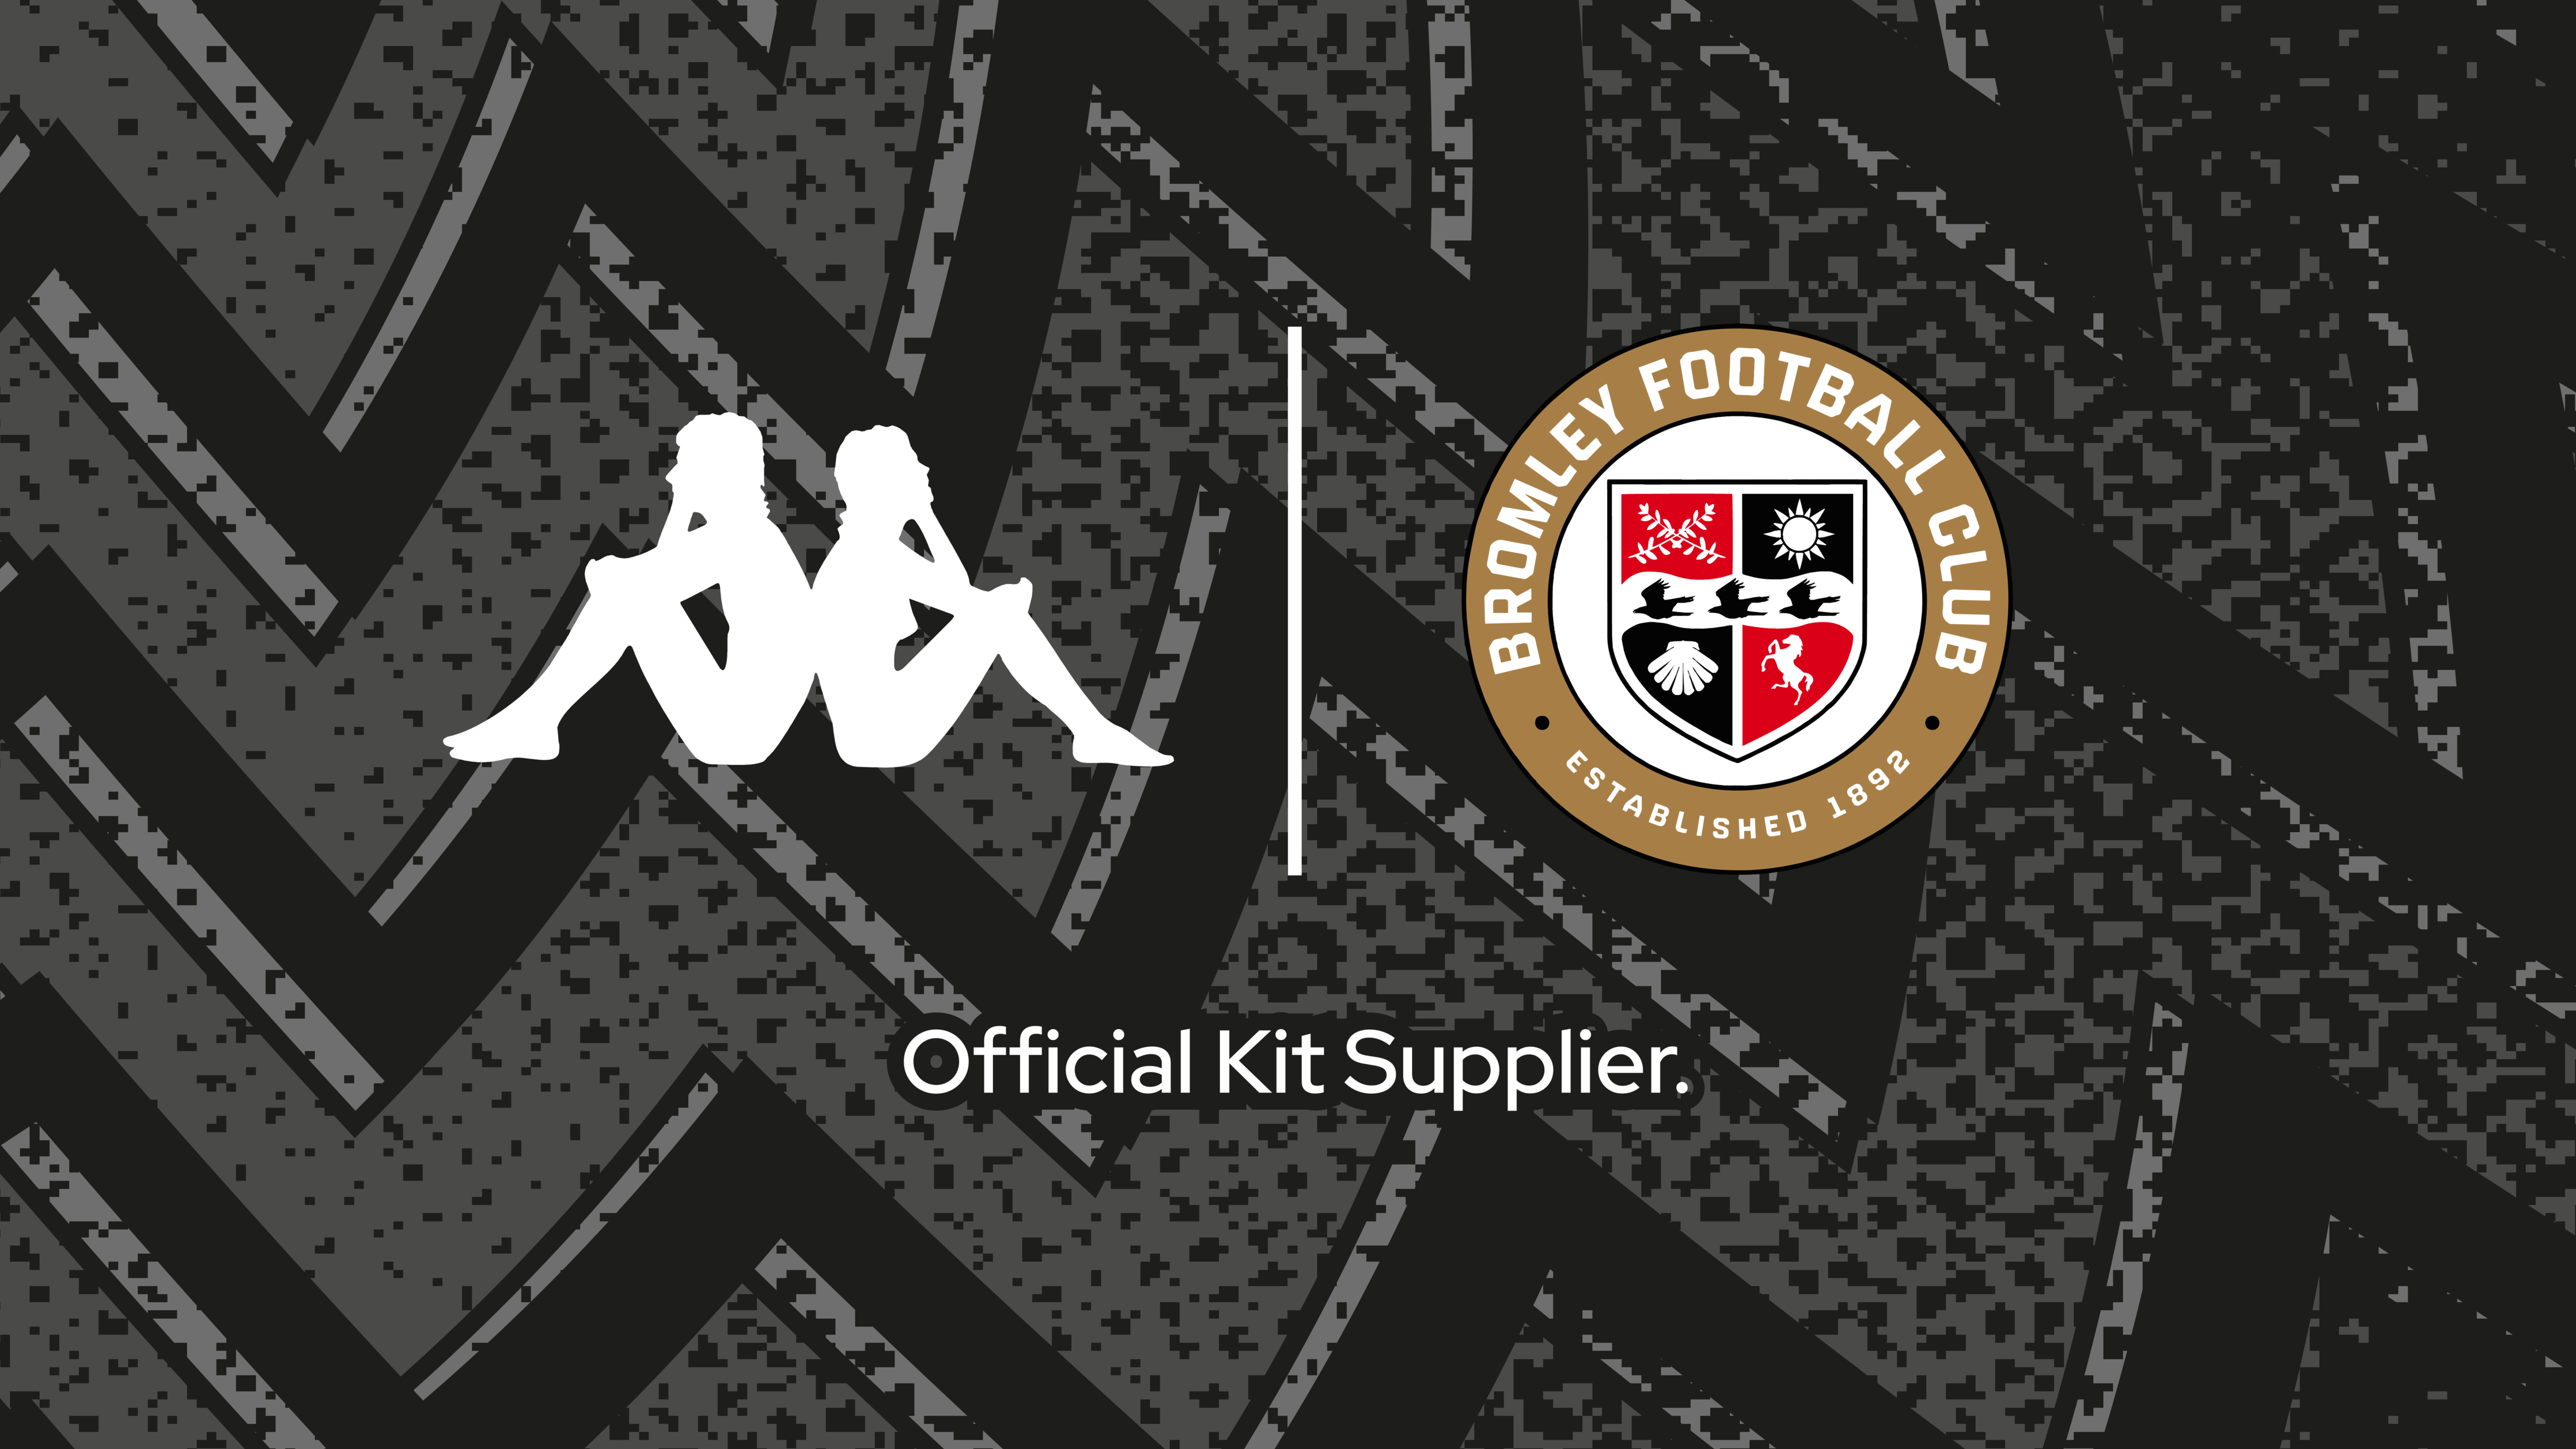 Kappa x Bromley FC Partnership with logos